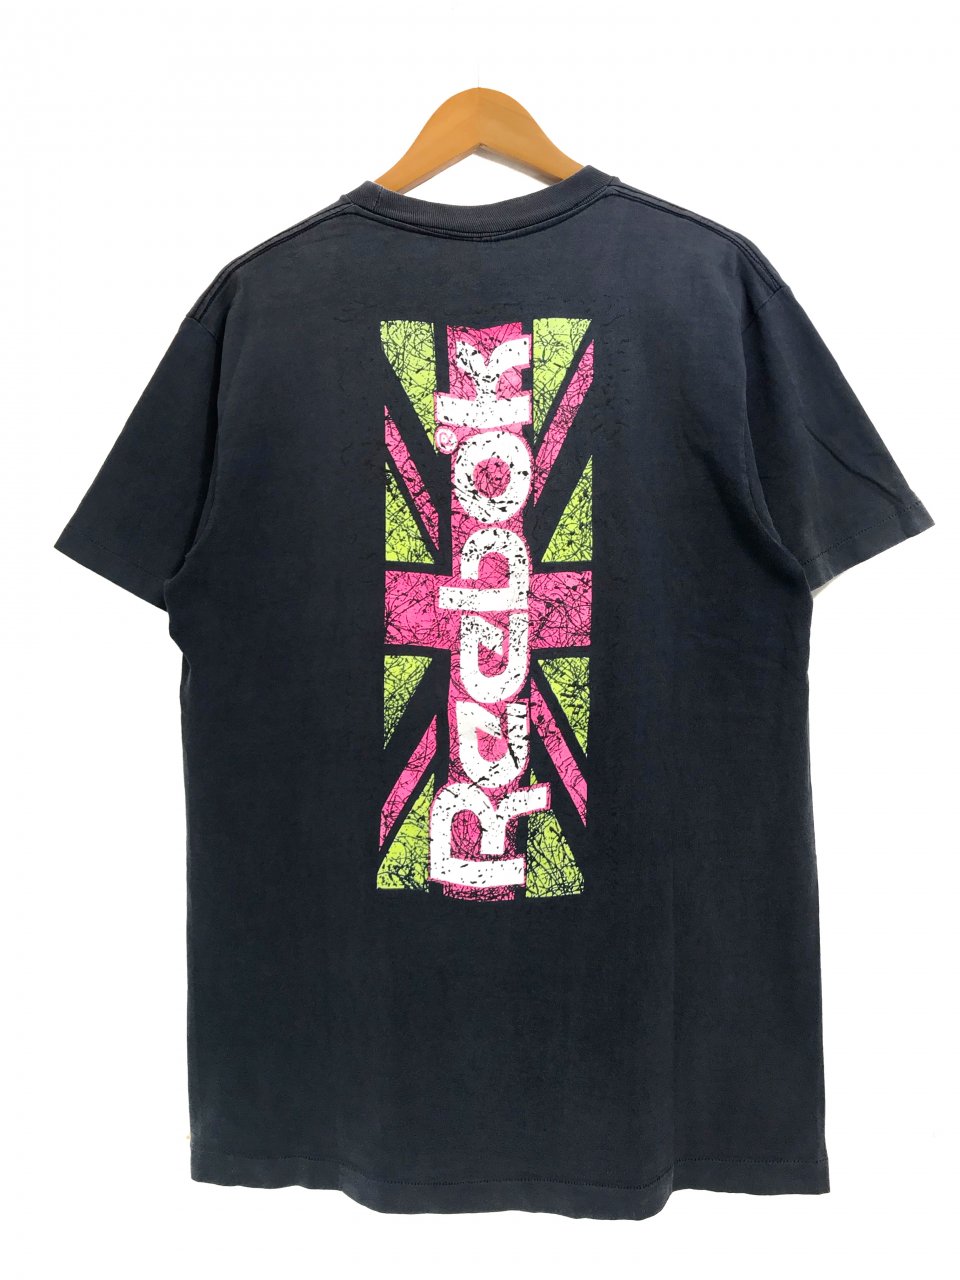 USA製 90s Reebok SPORT Logo Print S/S Tee 黒 XL リーボック スポーツ ロゴ プリント 半袖 Tシャツ  ブラック - NEWJOKE ONLINE STORE